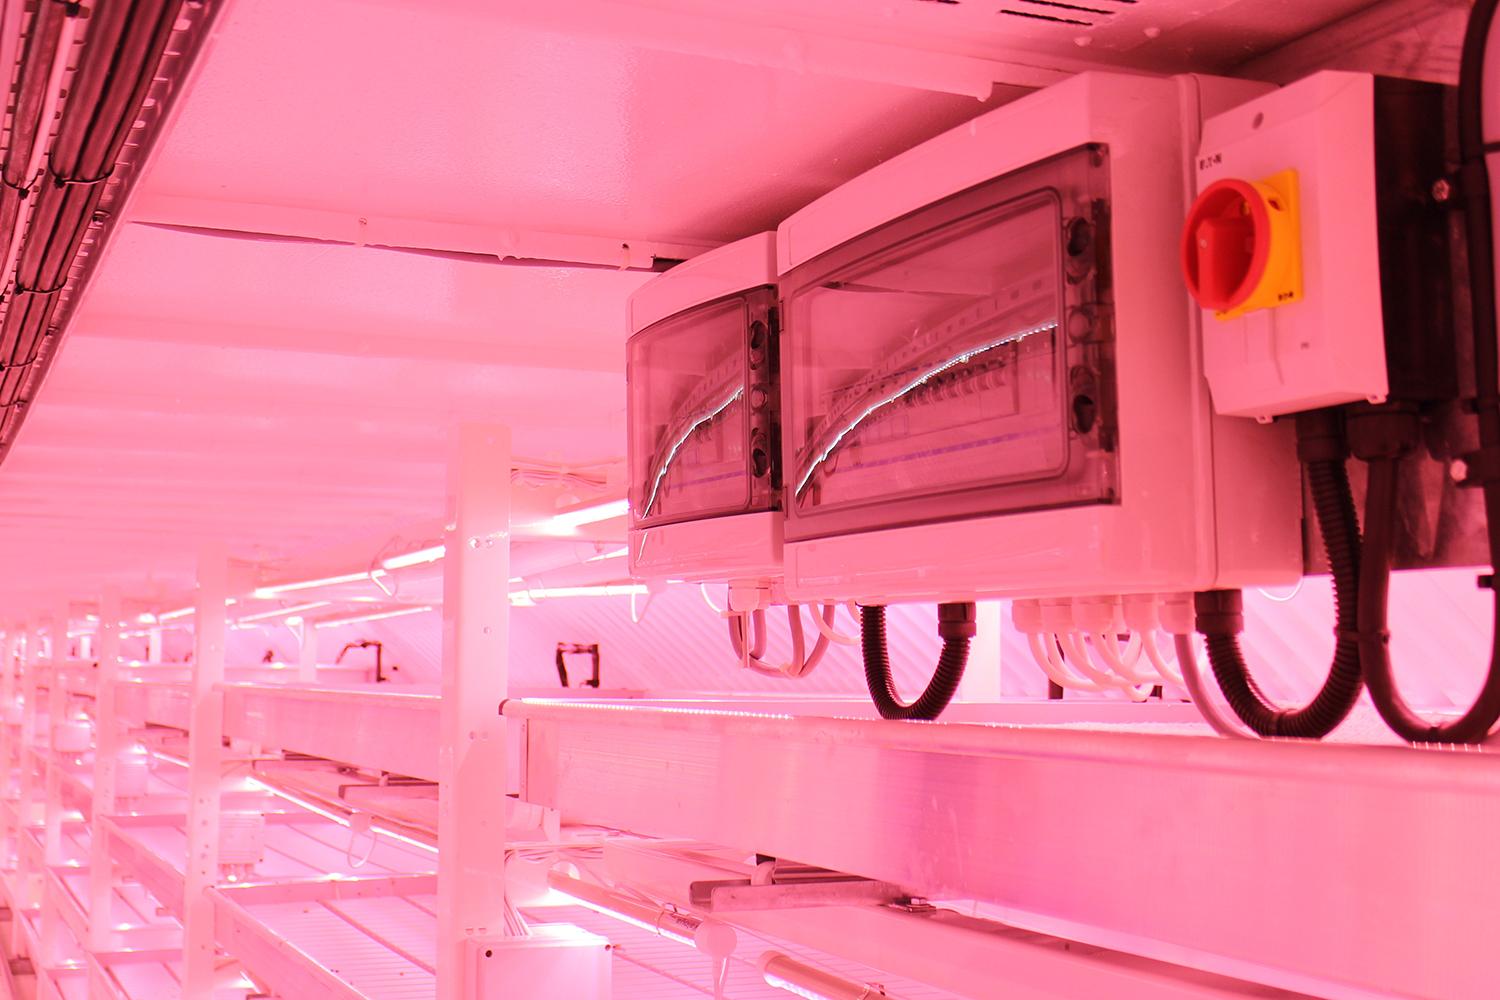 londons underground farm zero carbon food growing empty trays